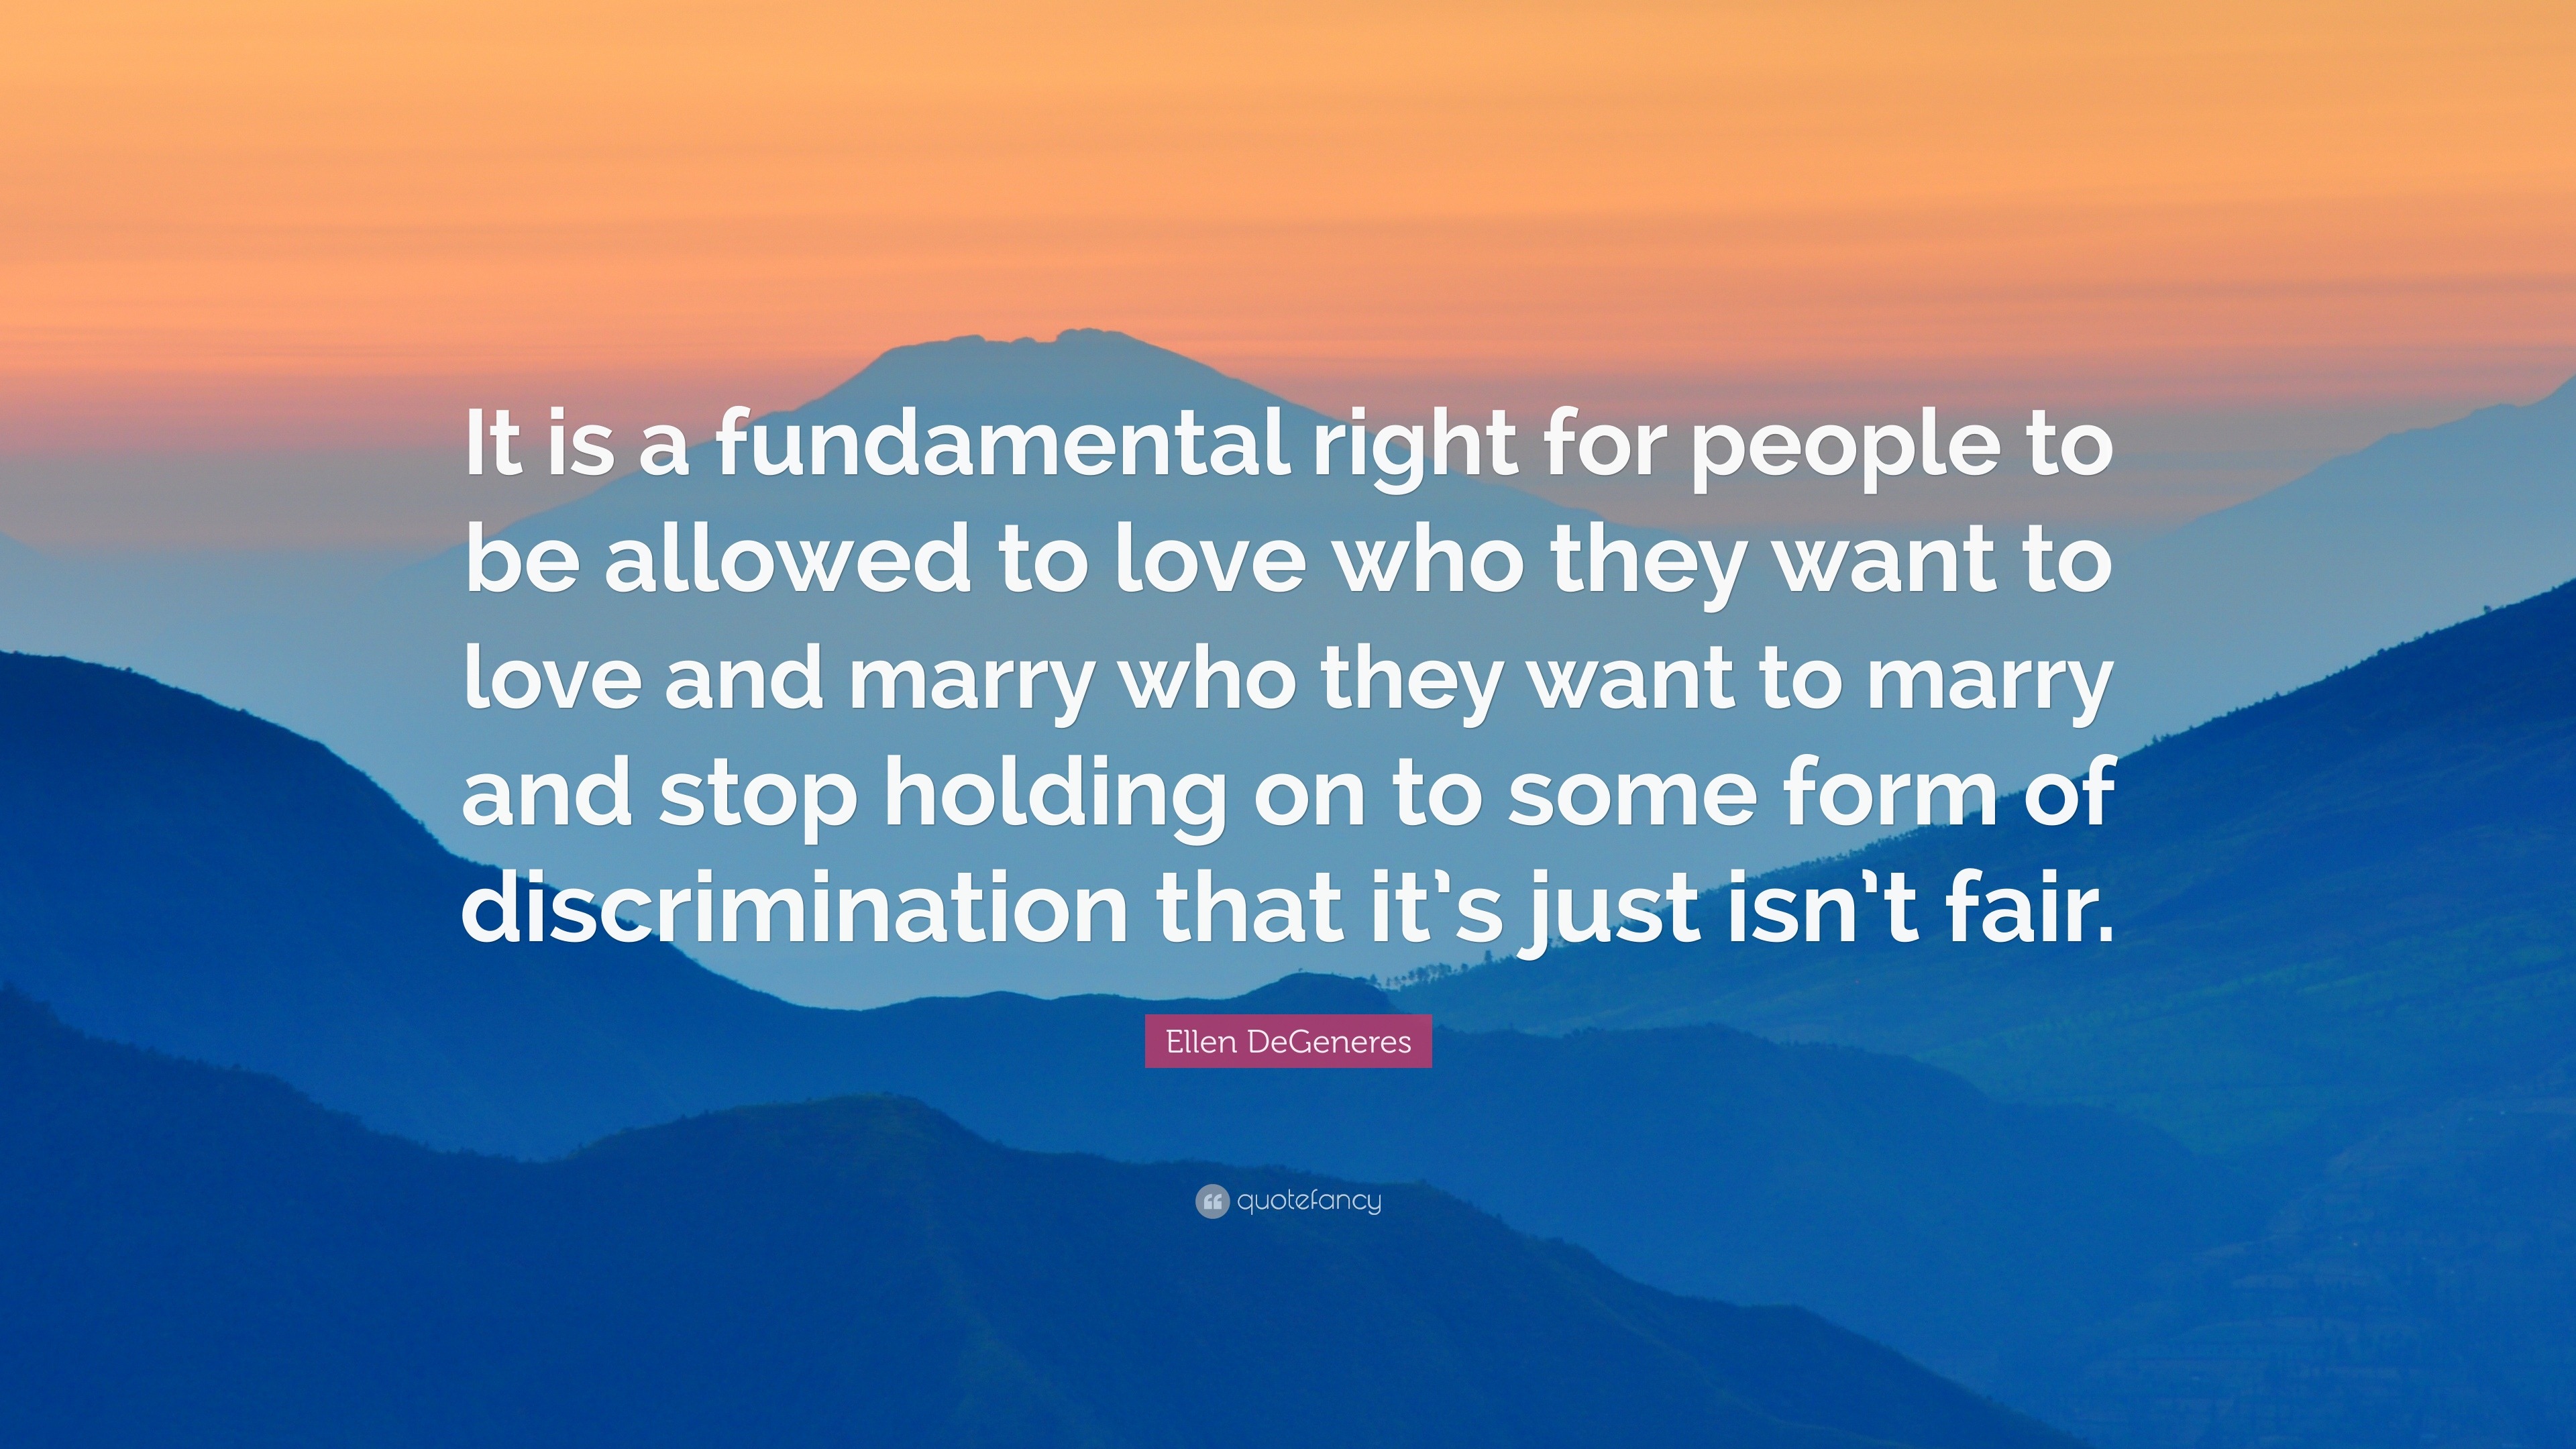 Ellen DeGeneres Quote: "It is a fundamental right for ...